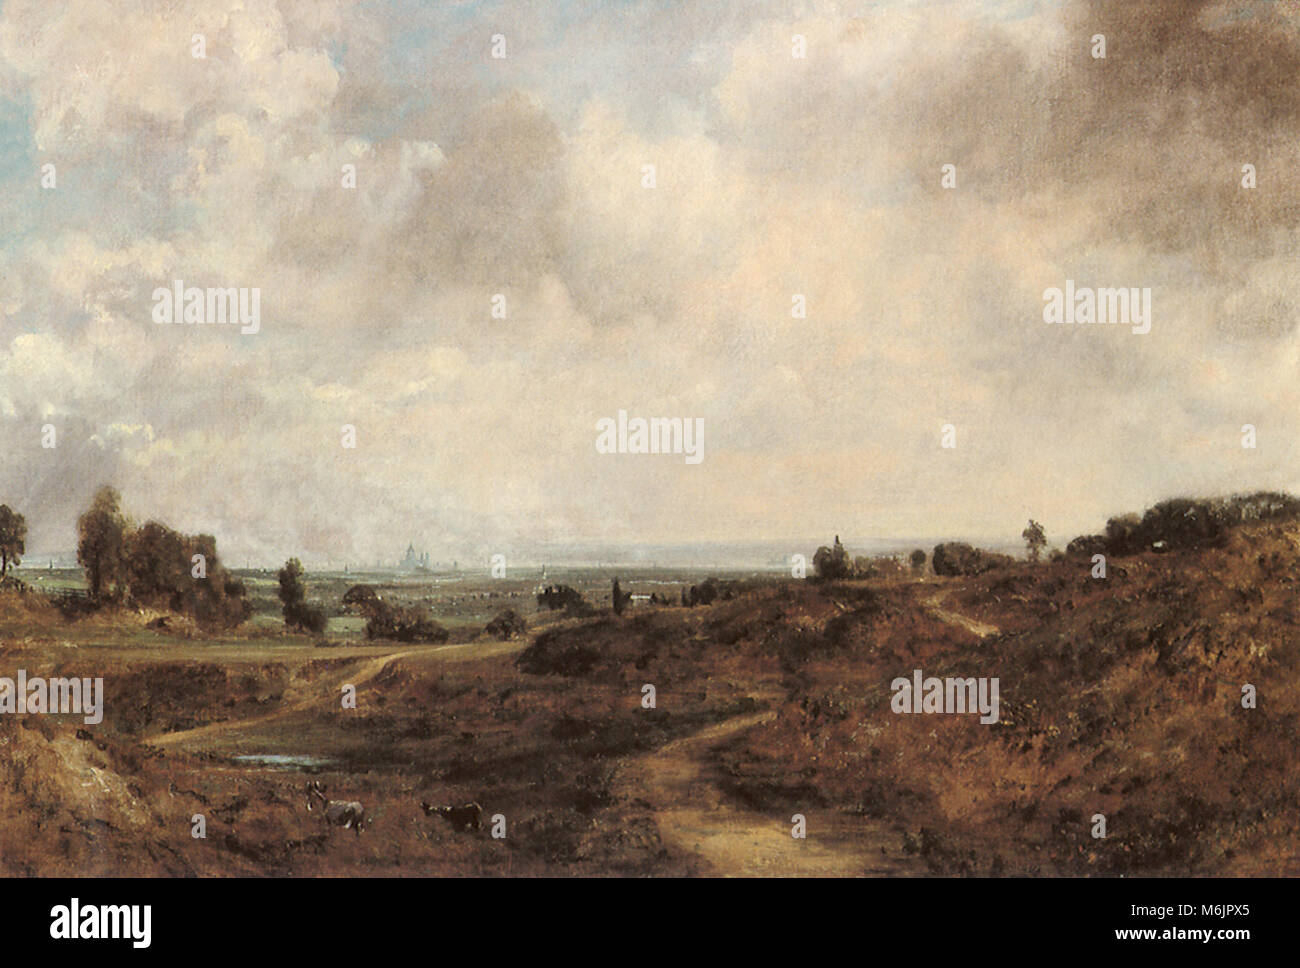 Mit London Hampstead Heath in der Ferne, Constable, John, 1828. Stockfoto